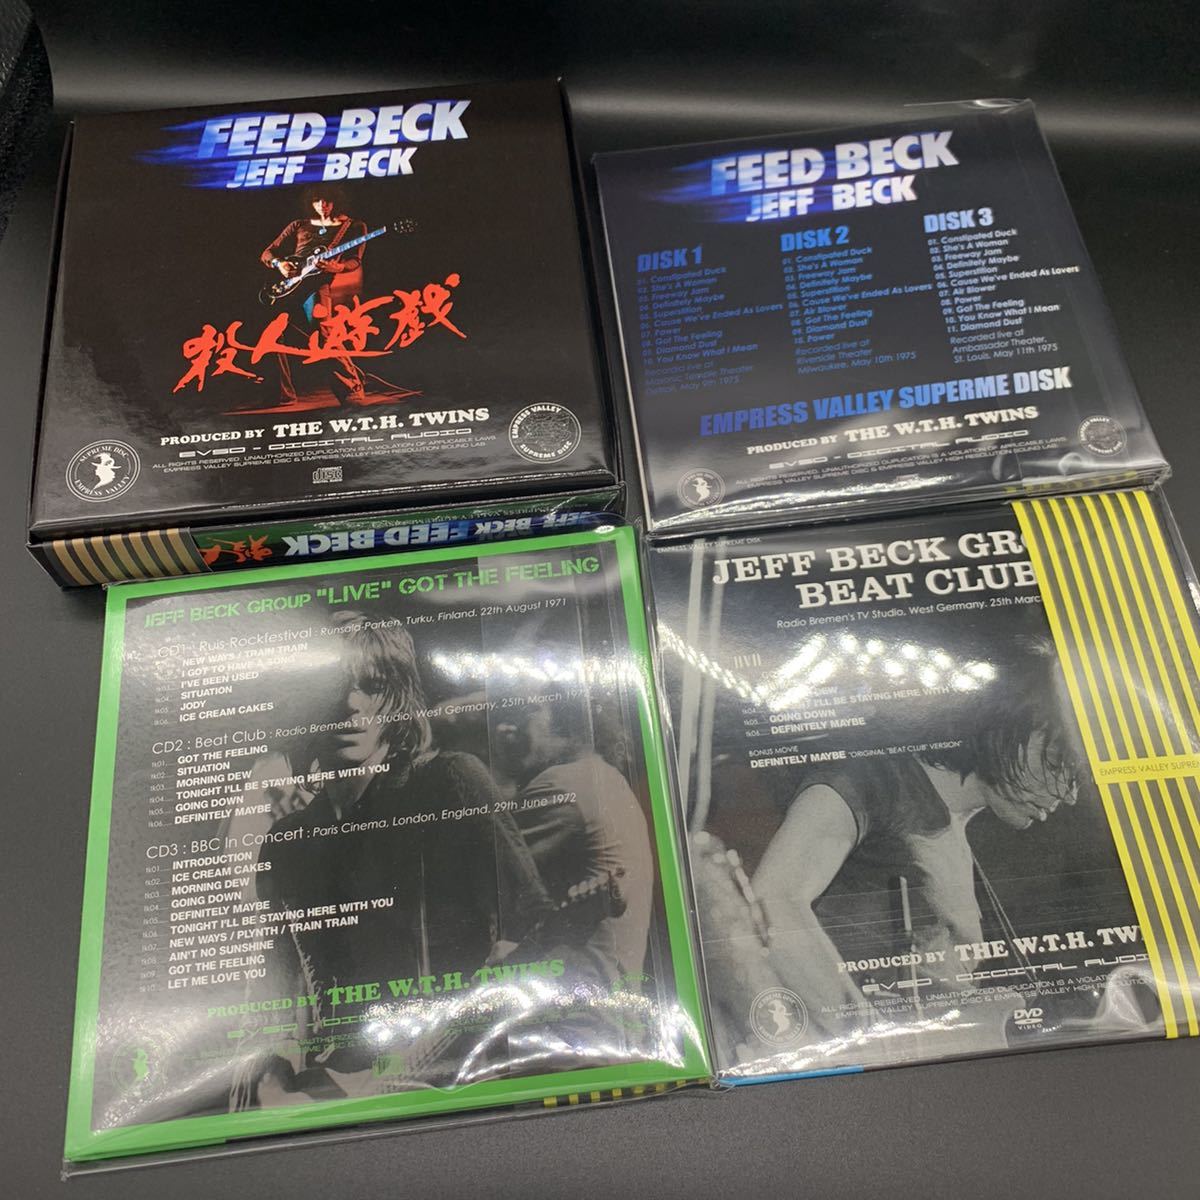 JEFF BECK : FEED BECK「殺人遊戯」PROMO BOX EMPRESS VALLEY SUPREME DISK PROMO VERSION BOX! HIGH END!